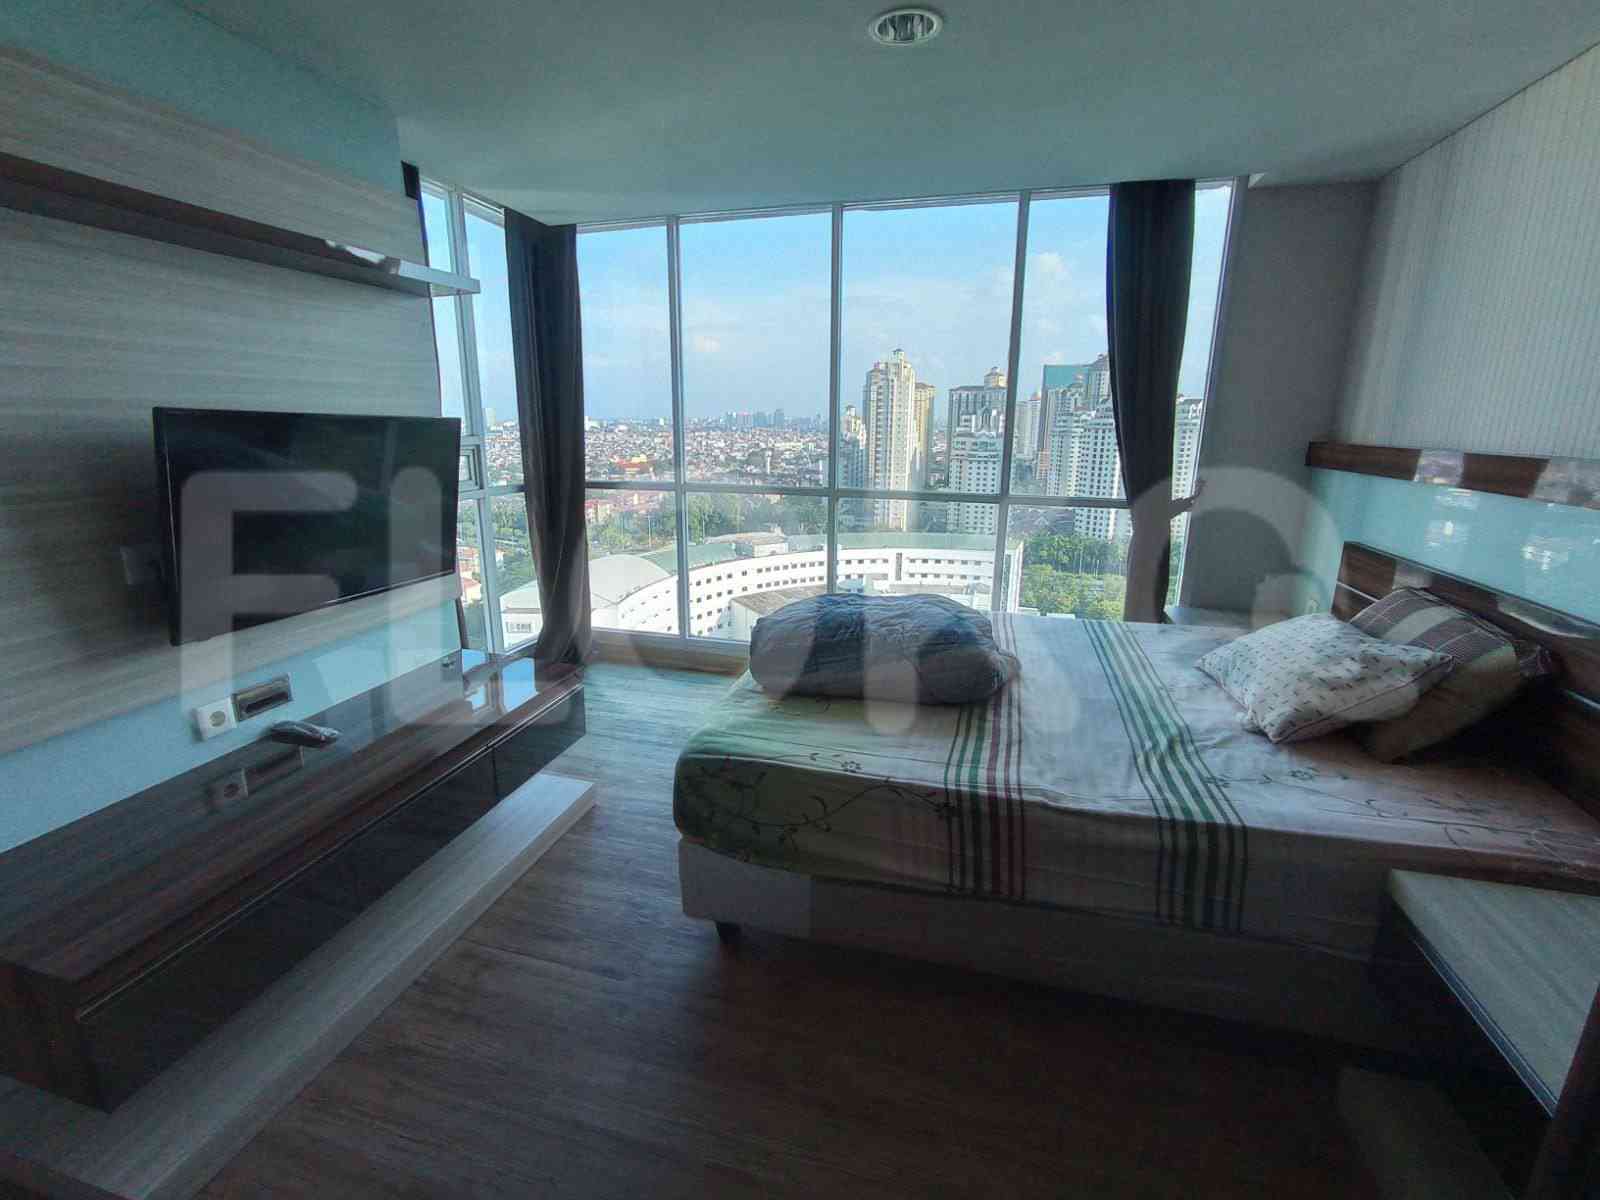 Tipe 3 Kamar Tidur di Lantai 13 untuk disewakan di Springhill Terrace Residence - fpa851 11